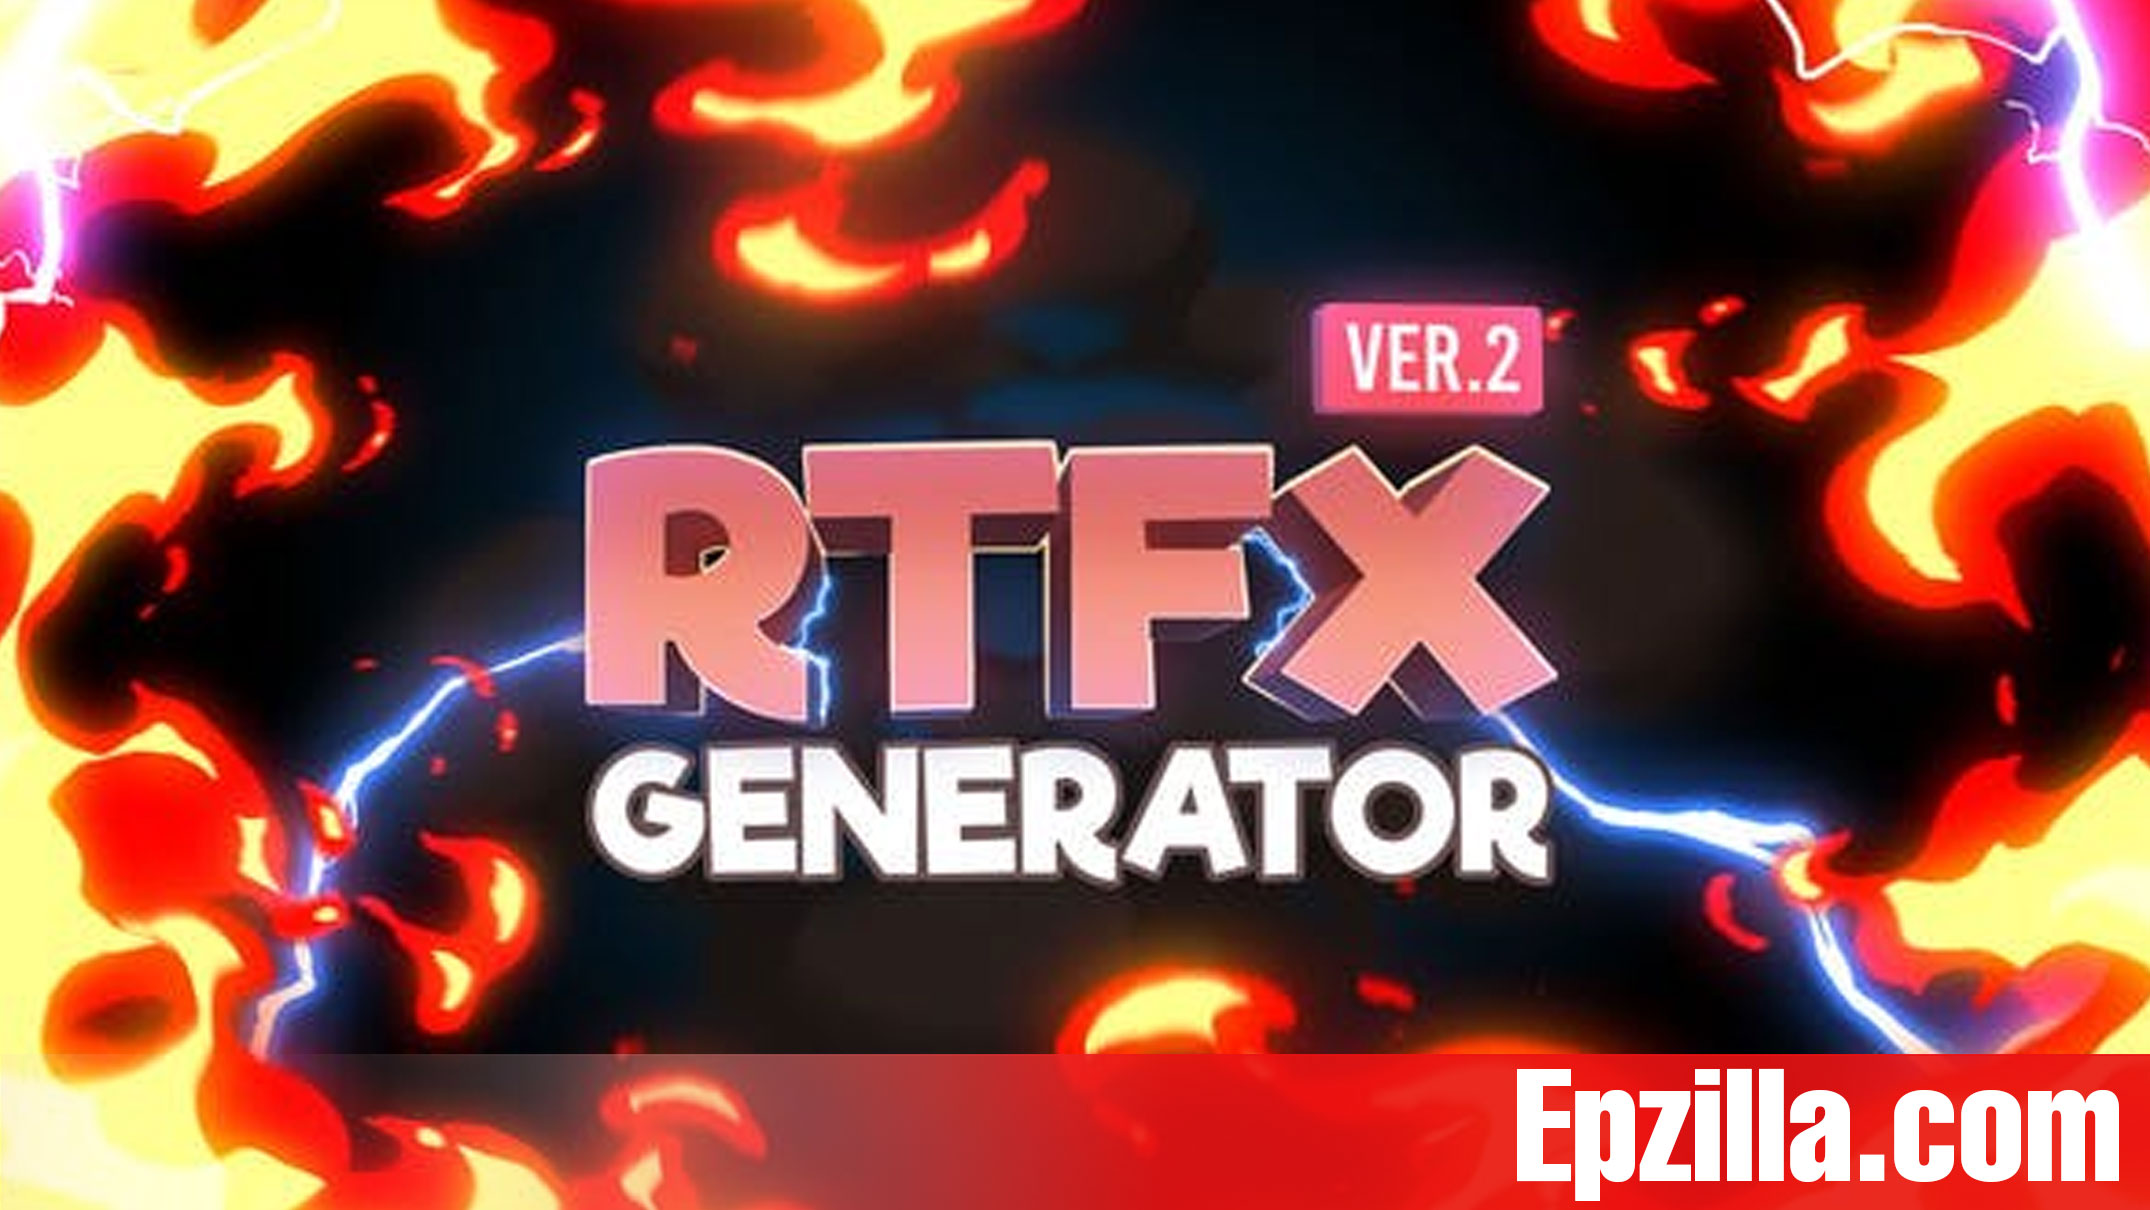 Videohive - RTFX Generator [1000 FX Elements] v2 19563523 Free Download From Epzilla.com